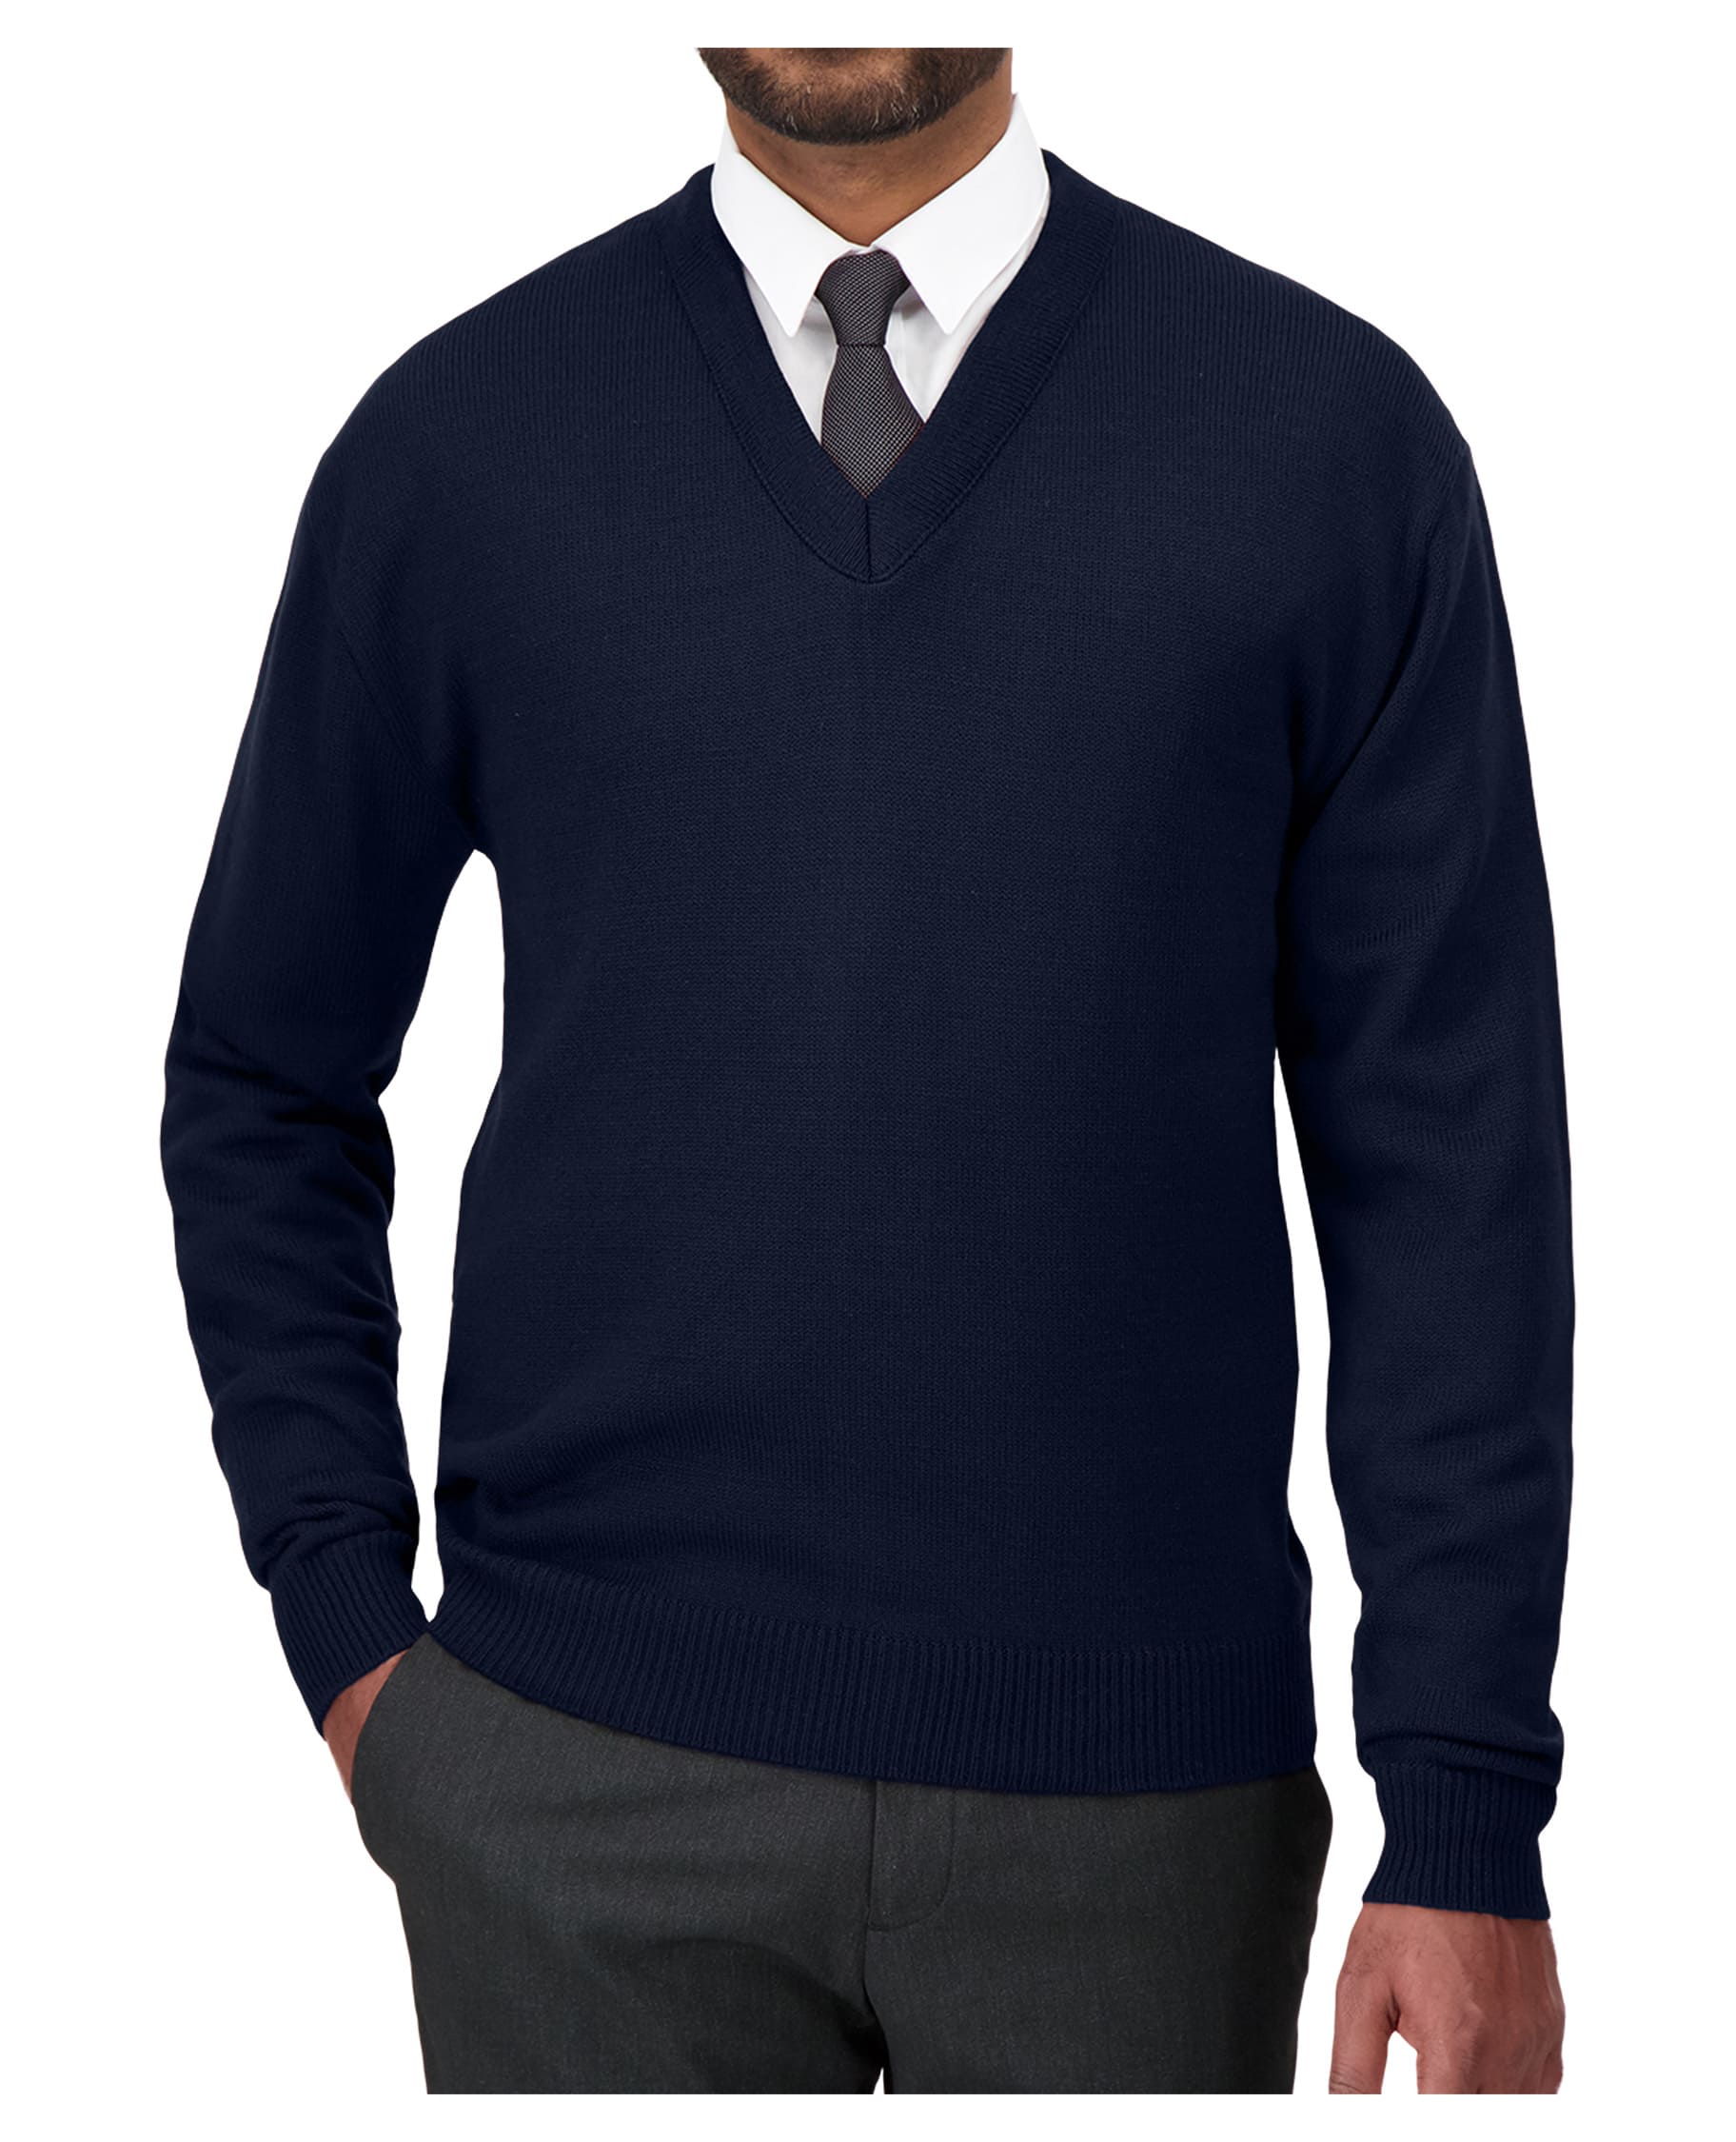 navy v-neck corporate sweater